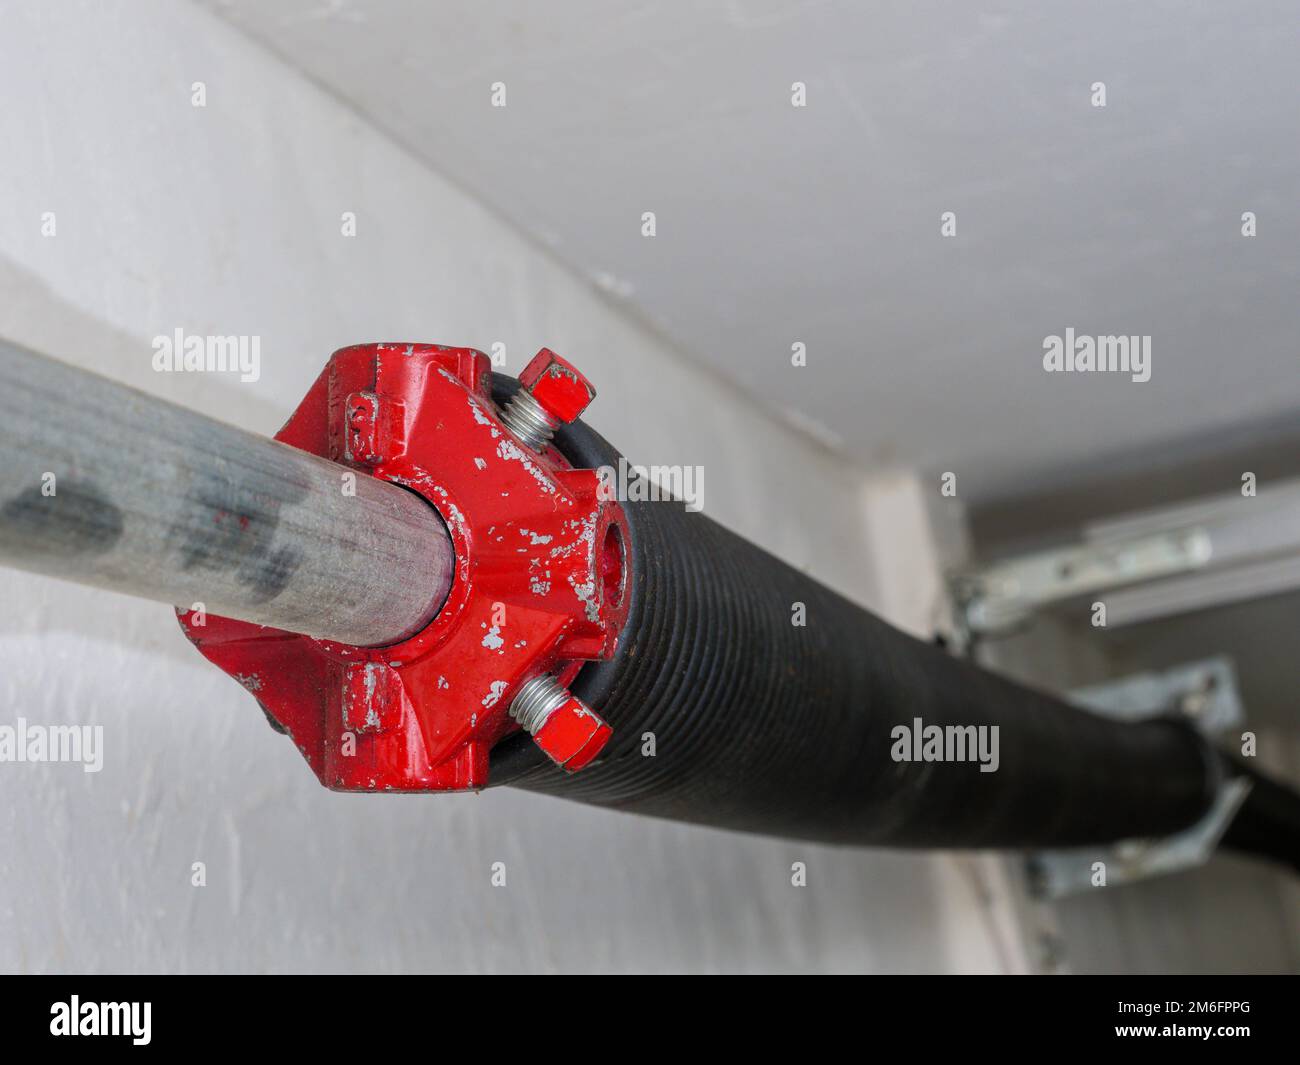 Electric garage door opener coiled tension spring. Stock Photo